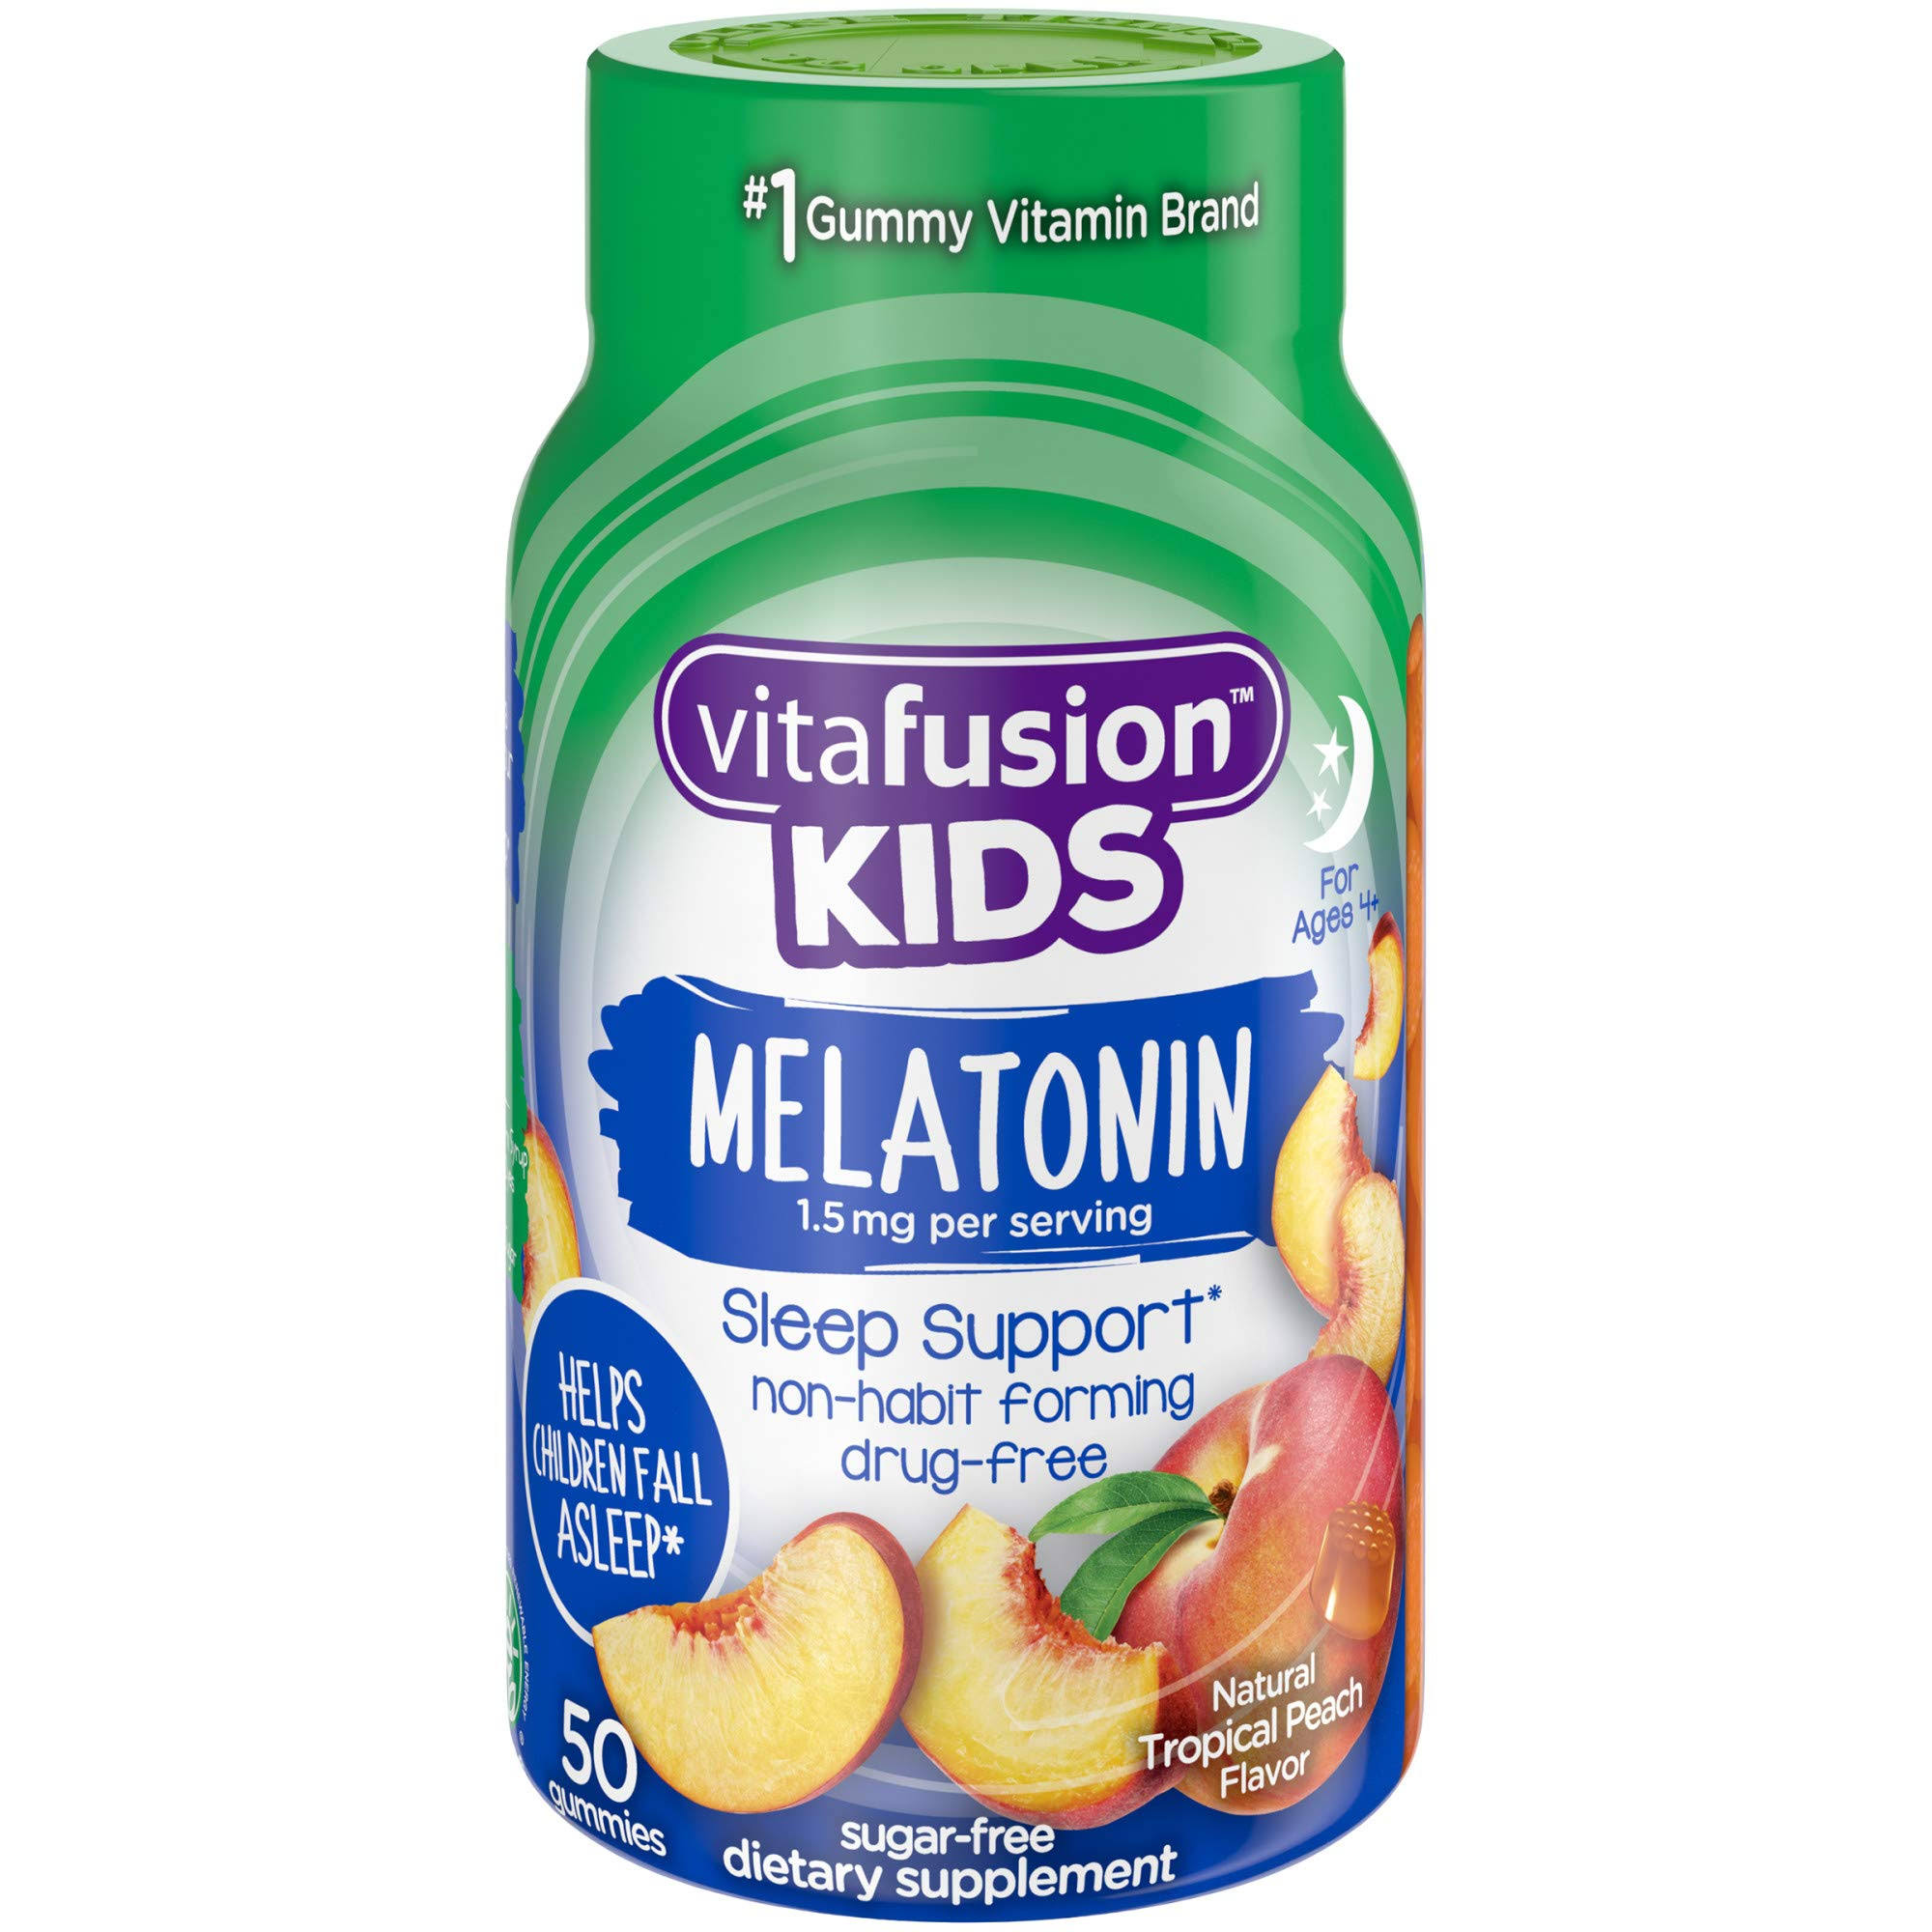 Vitafusion Kids Melatonin Gummy Vitamins, 50 count